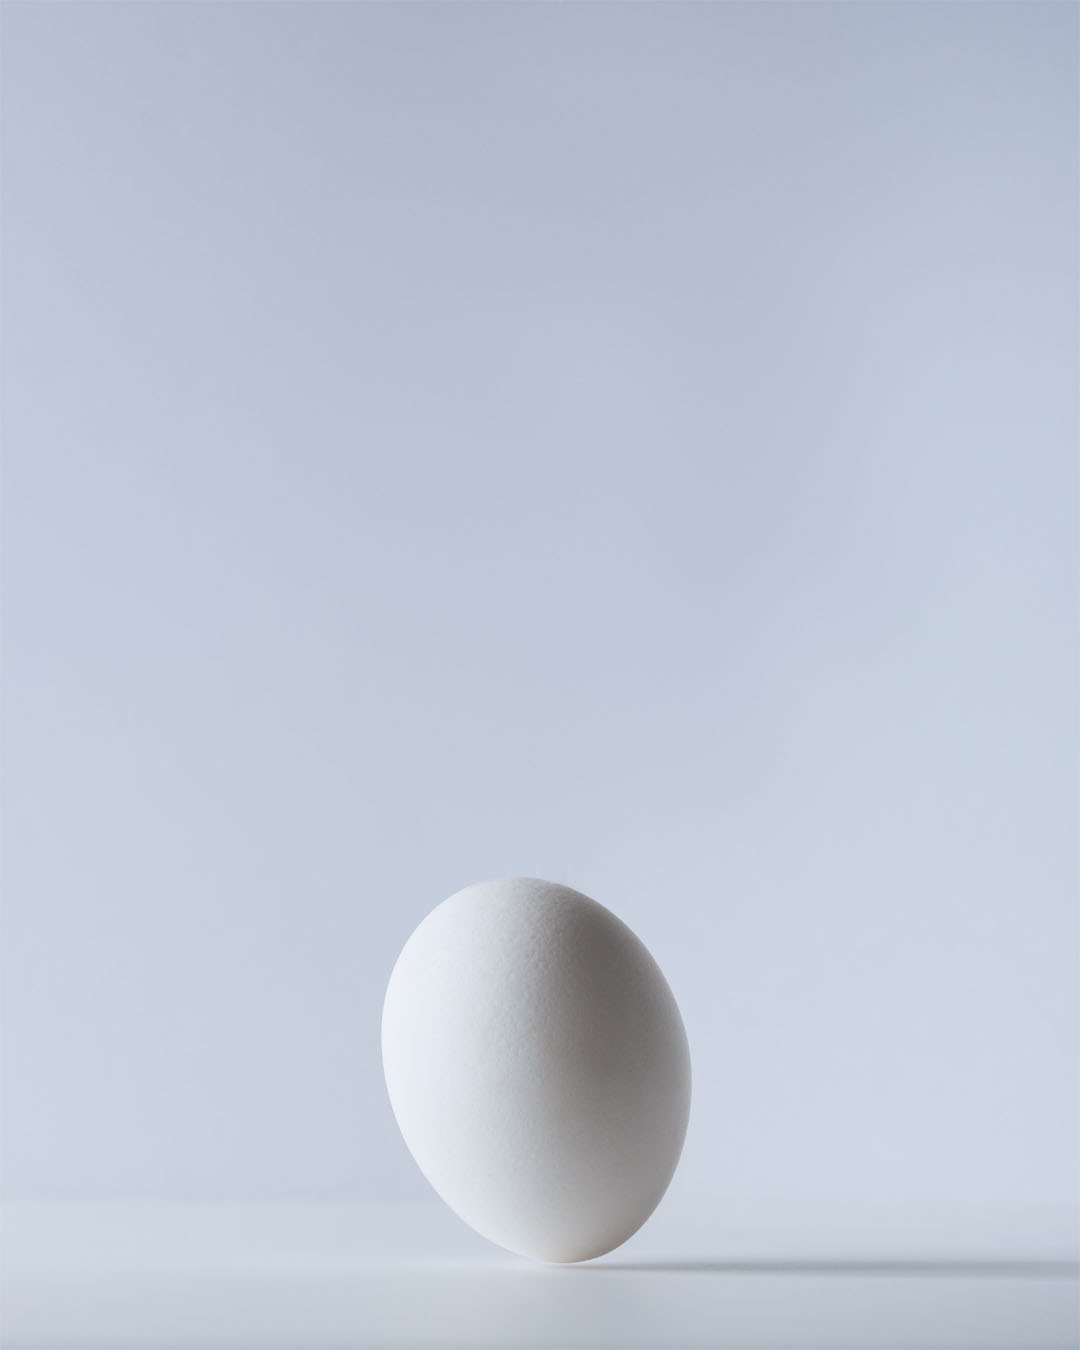 Falling Egg